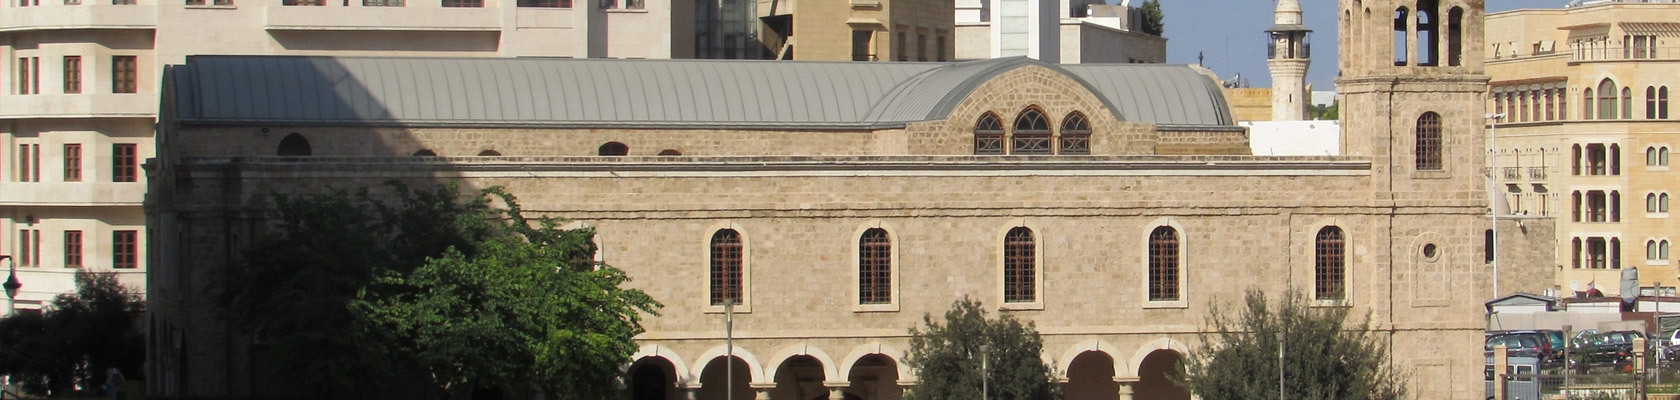 St.George Greek Orthodox Cathedral